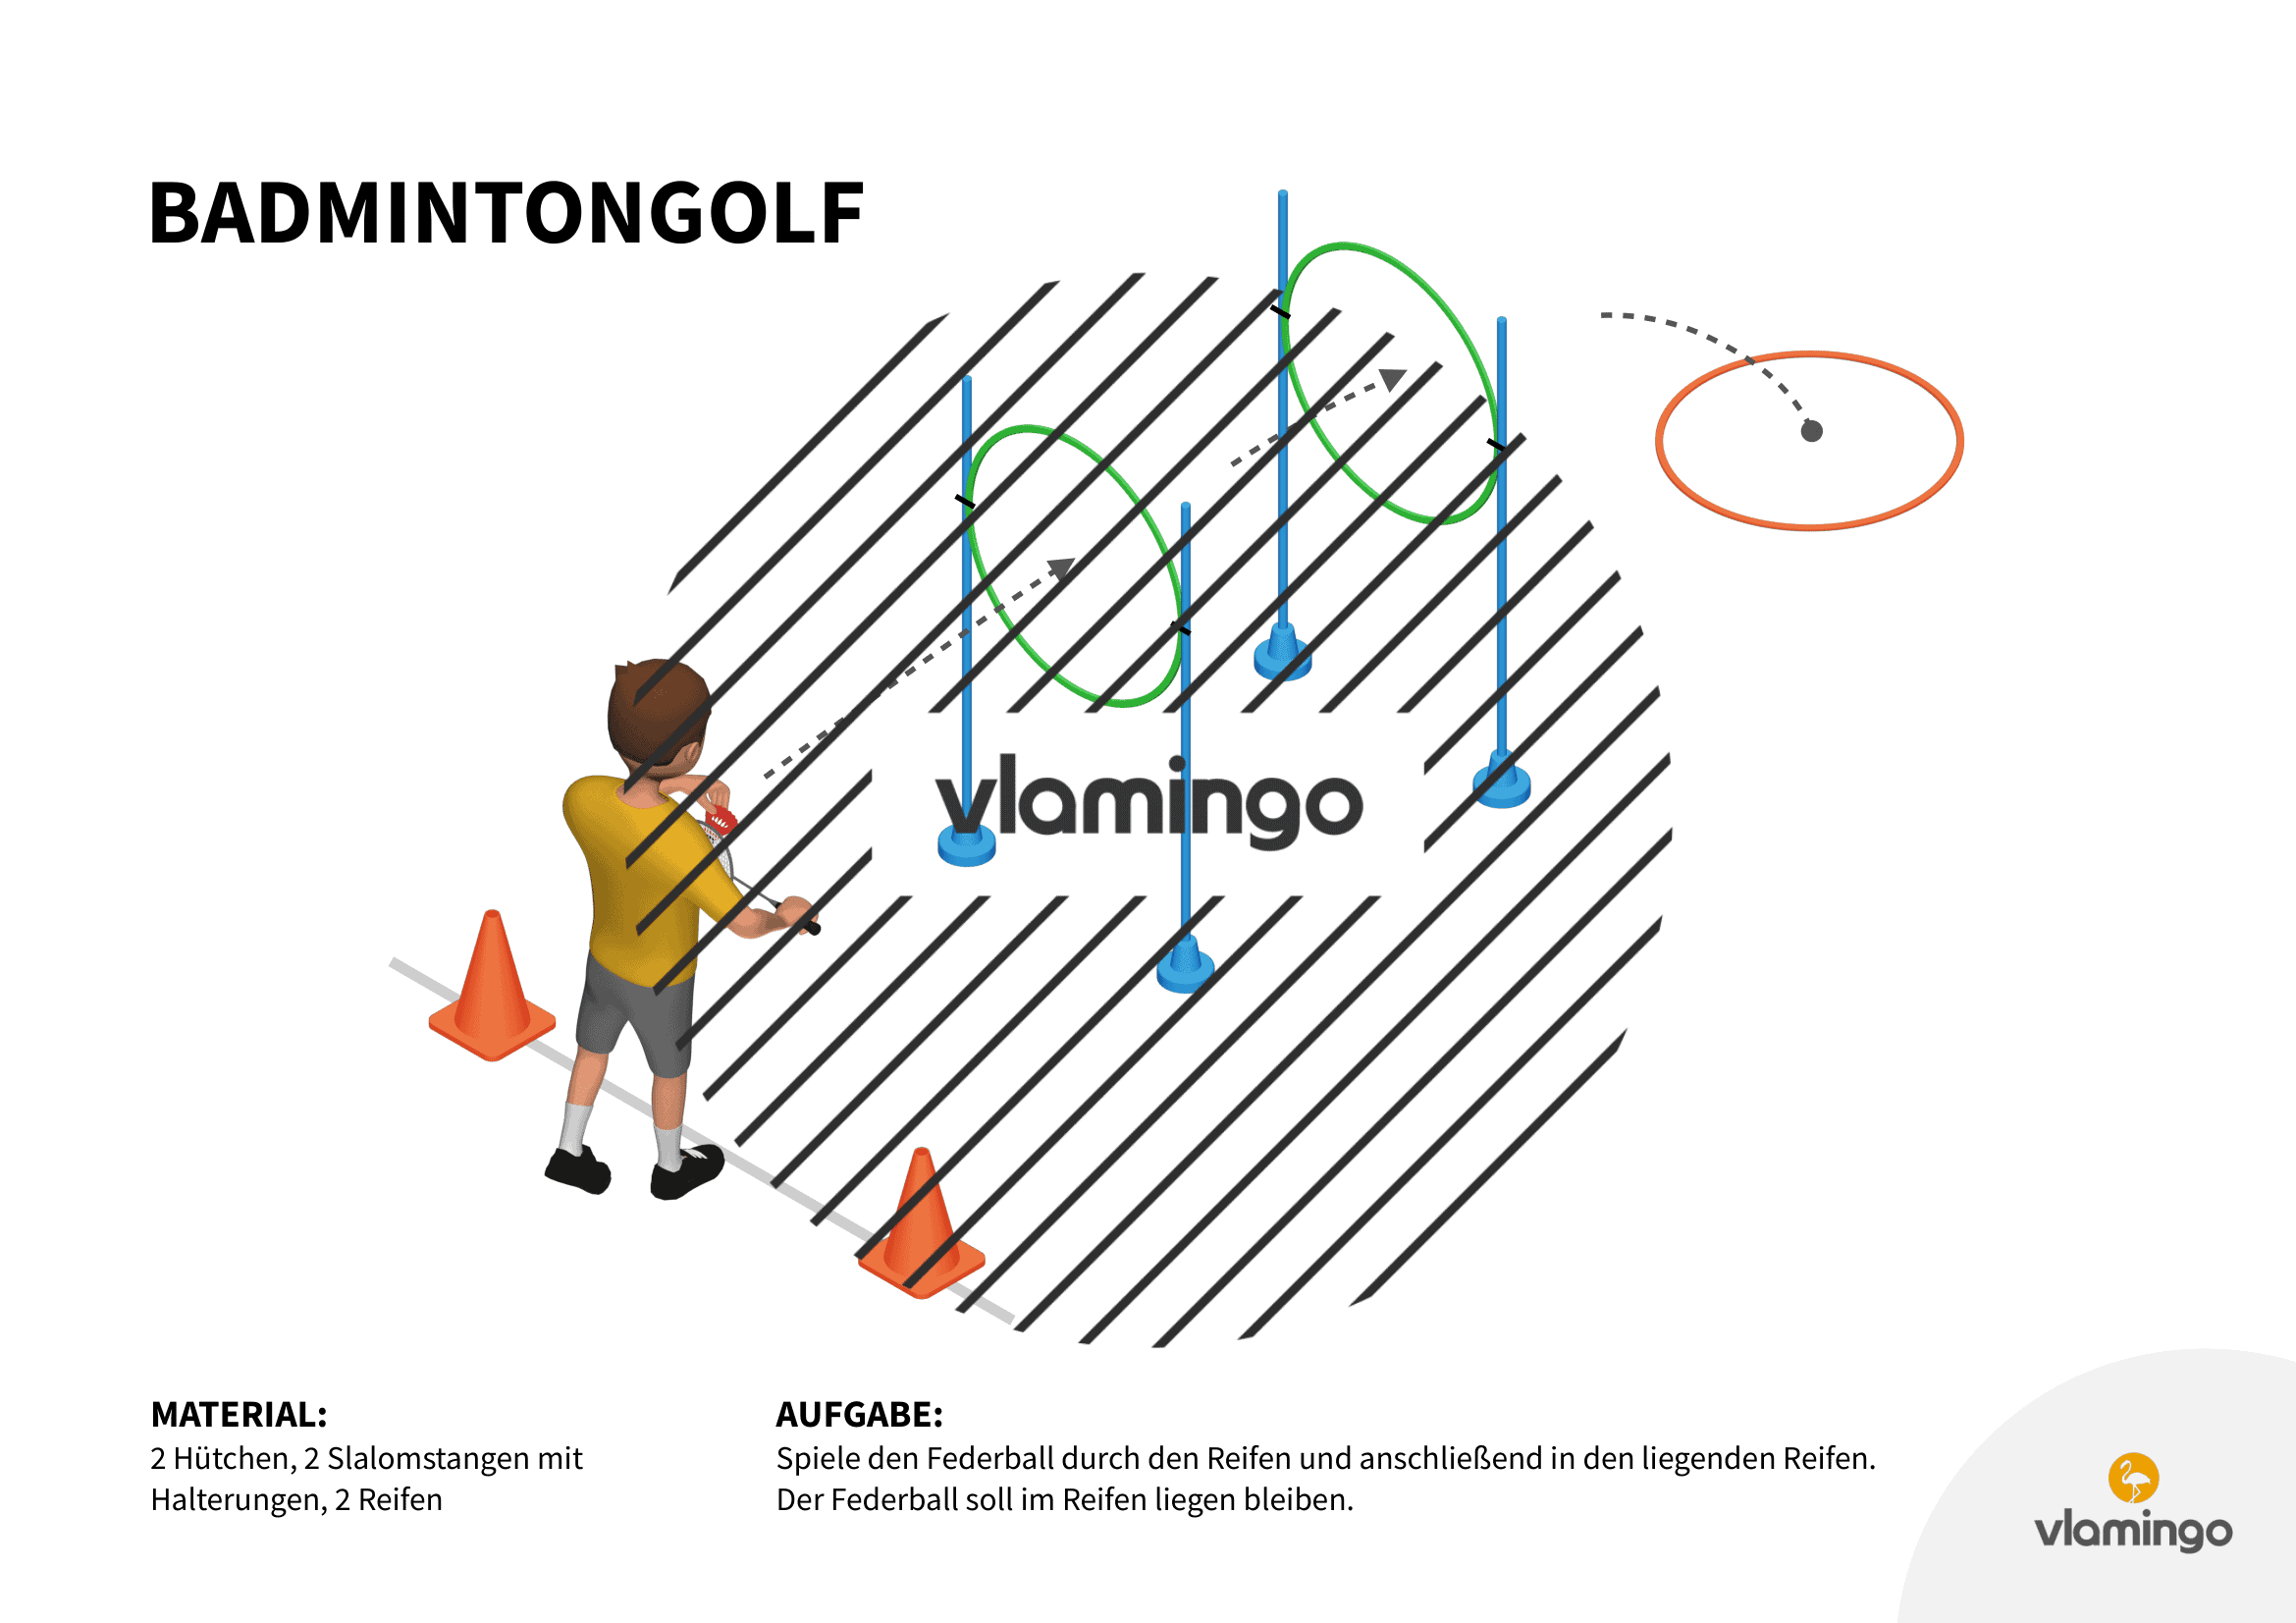 Badmintongolf - Station 7